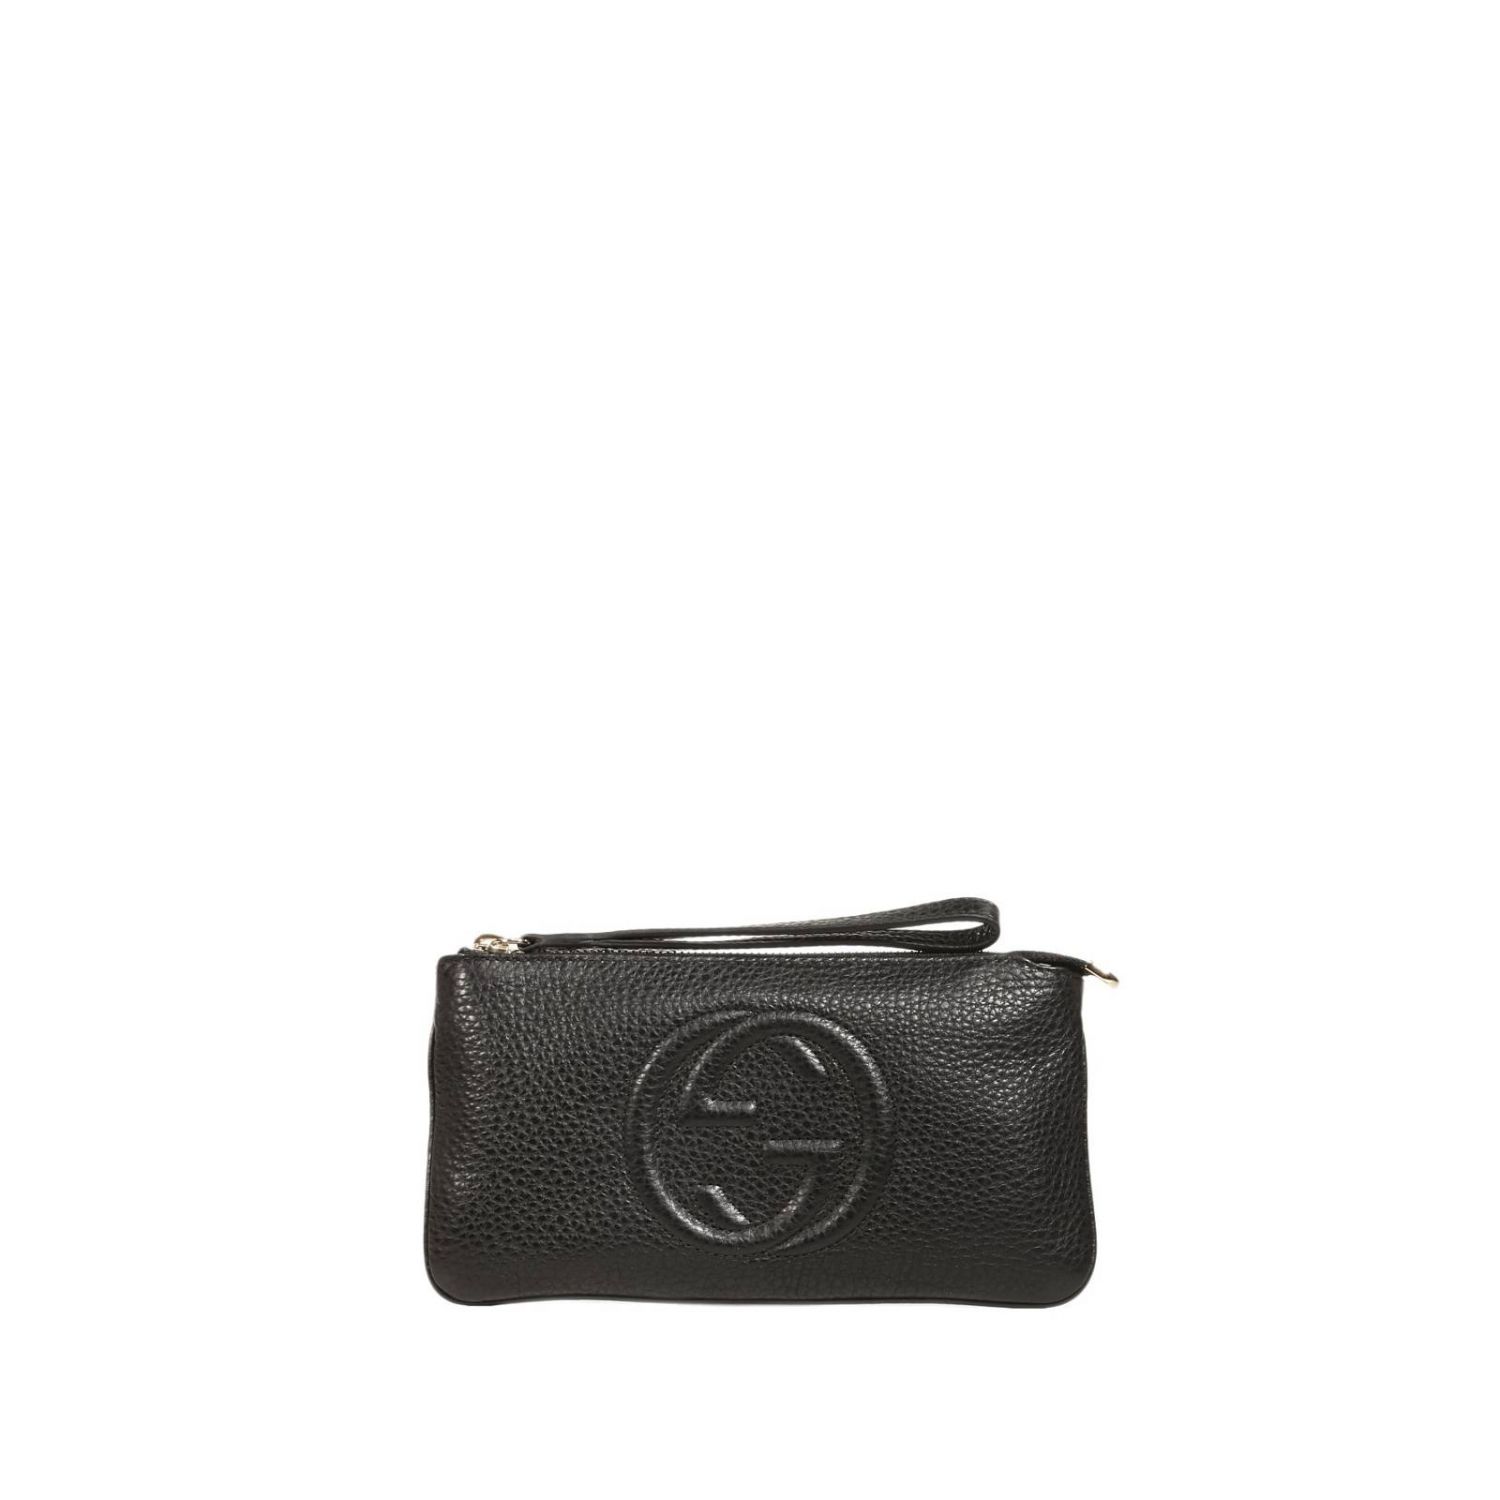 Gucci Clutch Leather Soho Wrist Bag in Black | Lyst